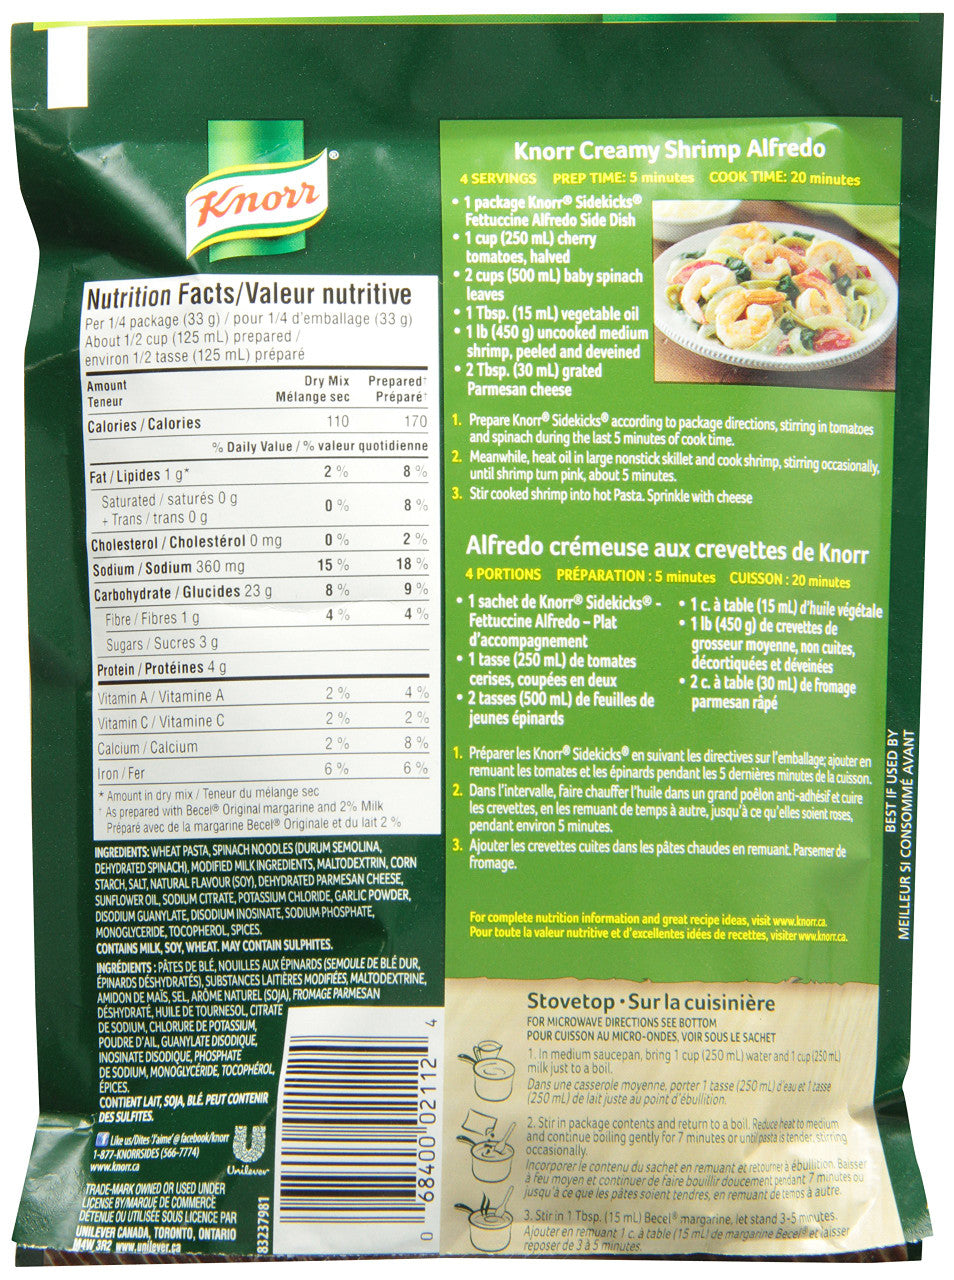 Knorr Sidekicks Fettucine Alfredo Pasta 133g/4.7oz, (2 pack) {Imported from Canada}